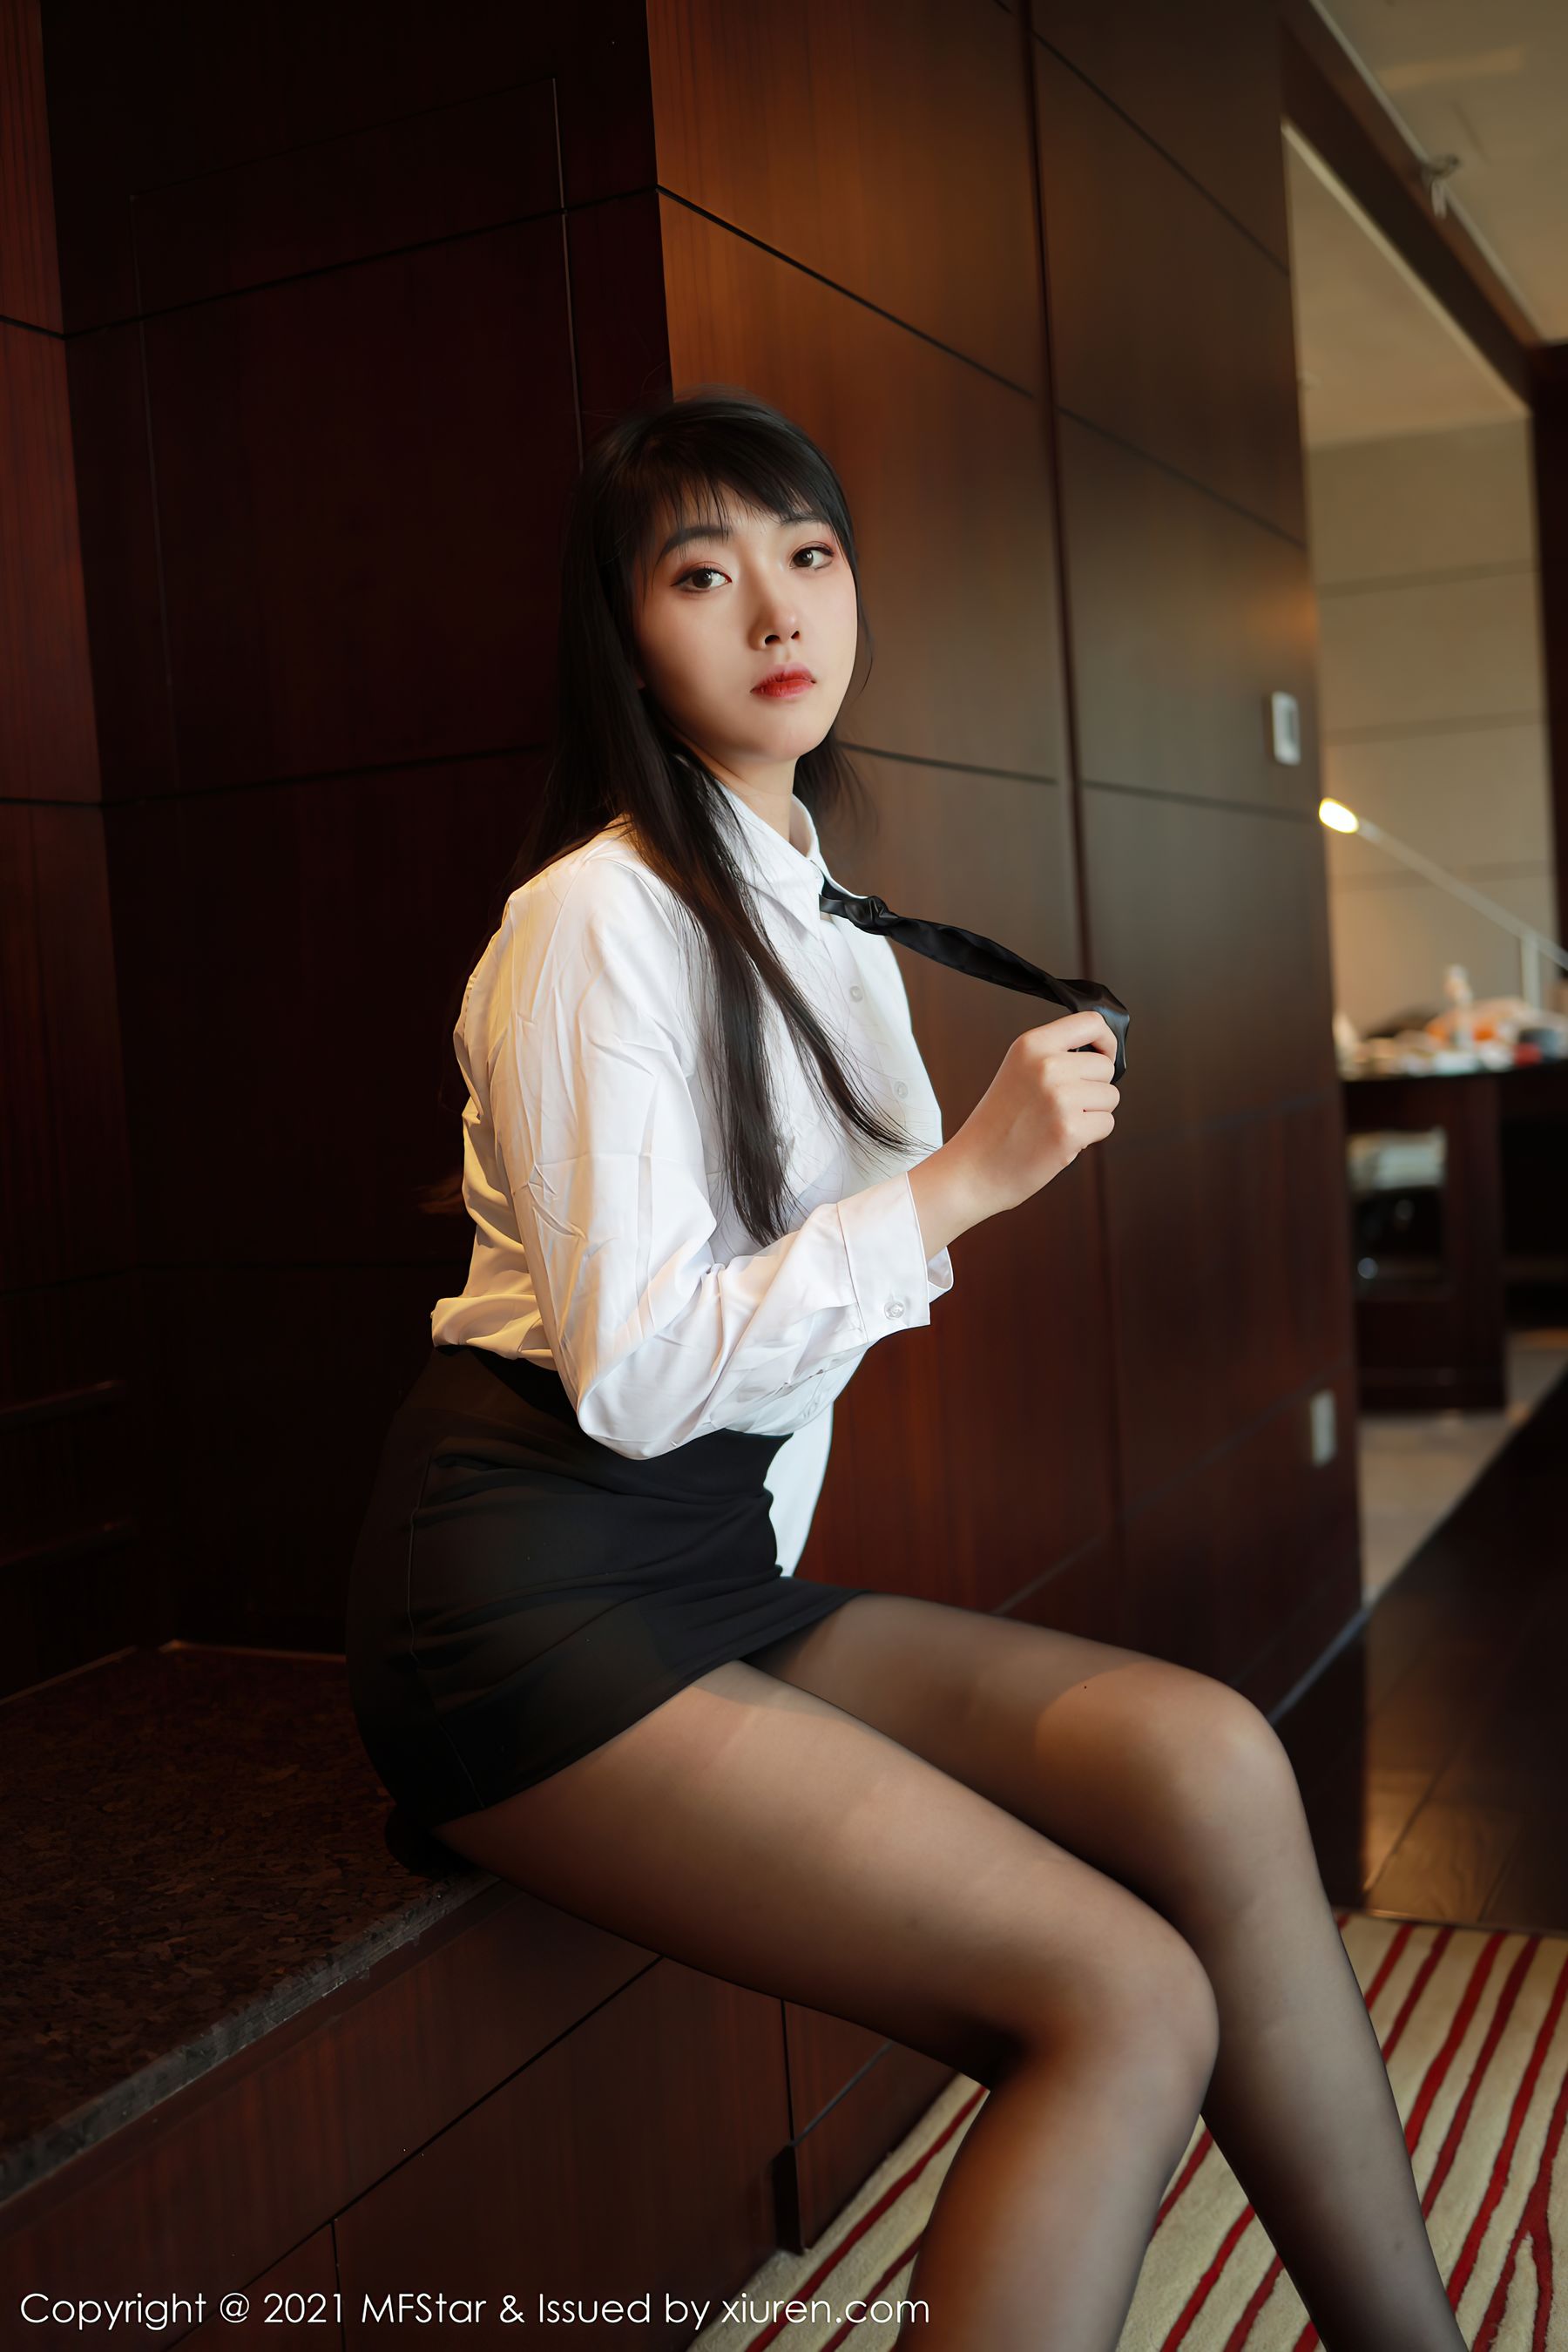 [Model Academy Mfstar] Vol.449 Pot Bread YOU – Classic White Shirt Black Skirt Workplace Secret Occupation OL Series